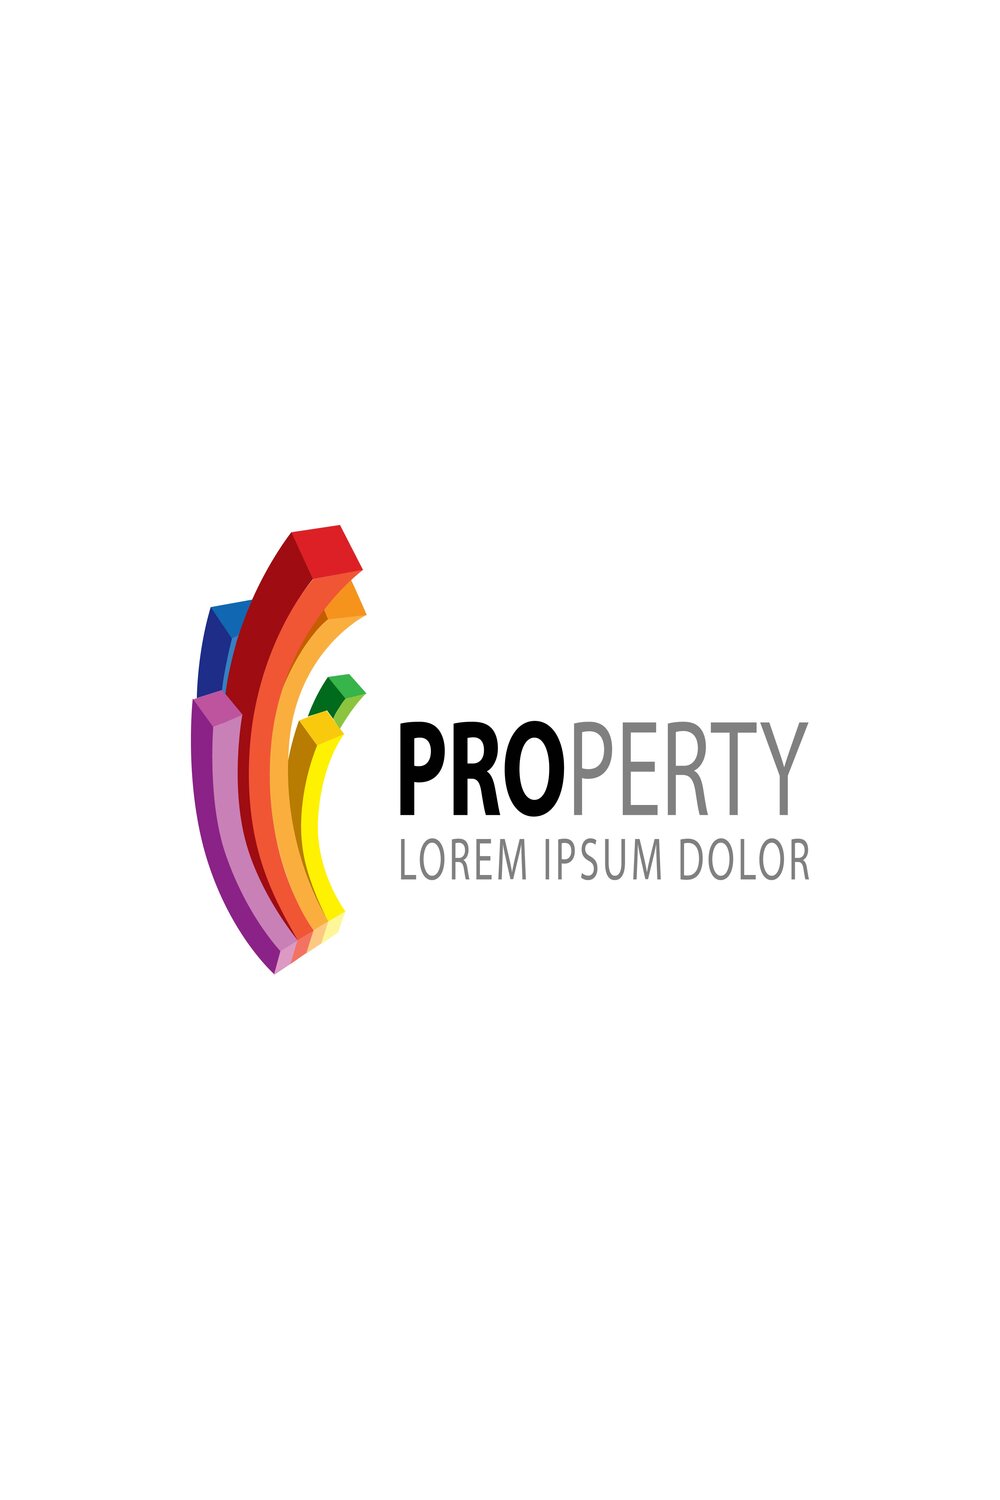 3d property logo pinterest preview image.